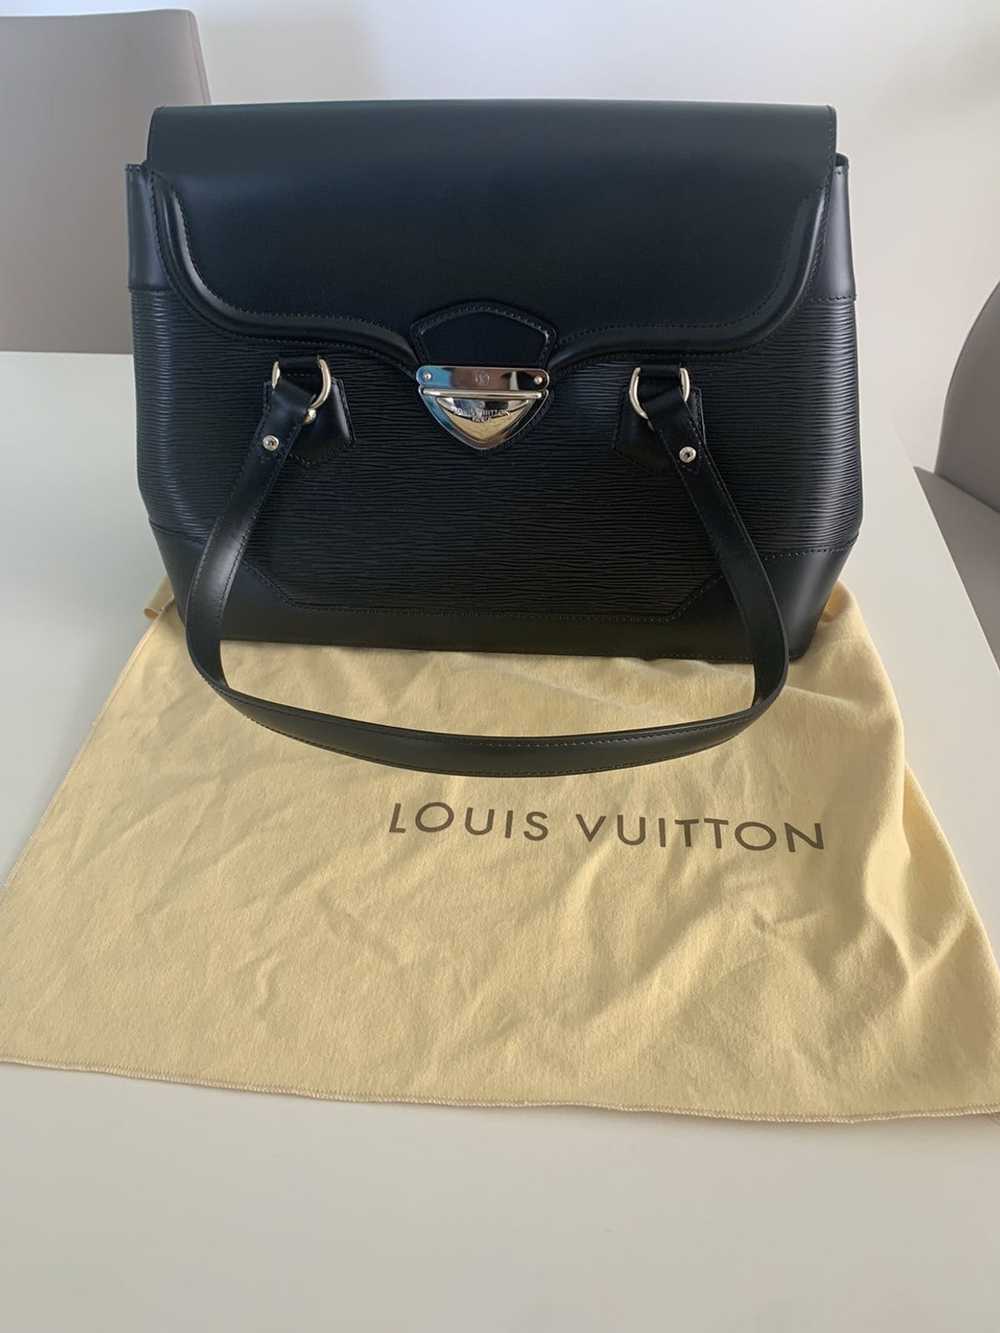 Louis Vuitton Louis Vuitton Paris Handbag Epi - image 1